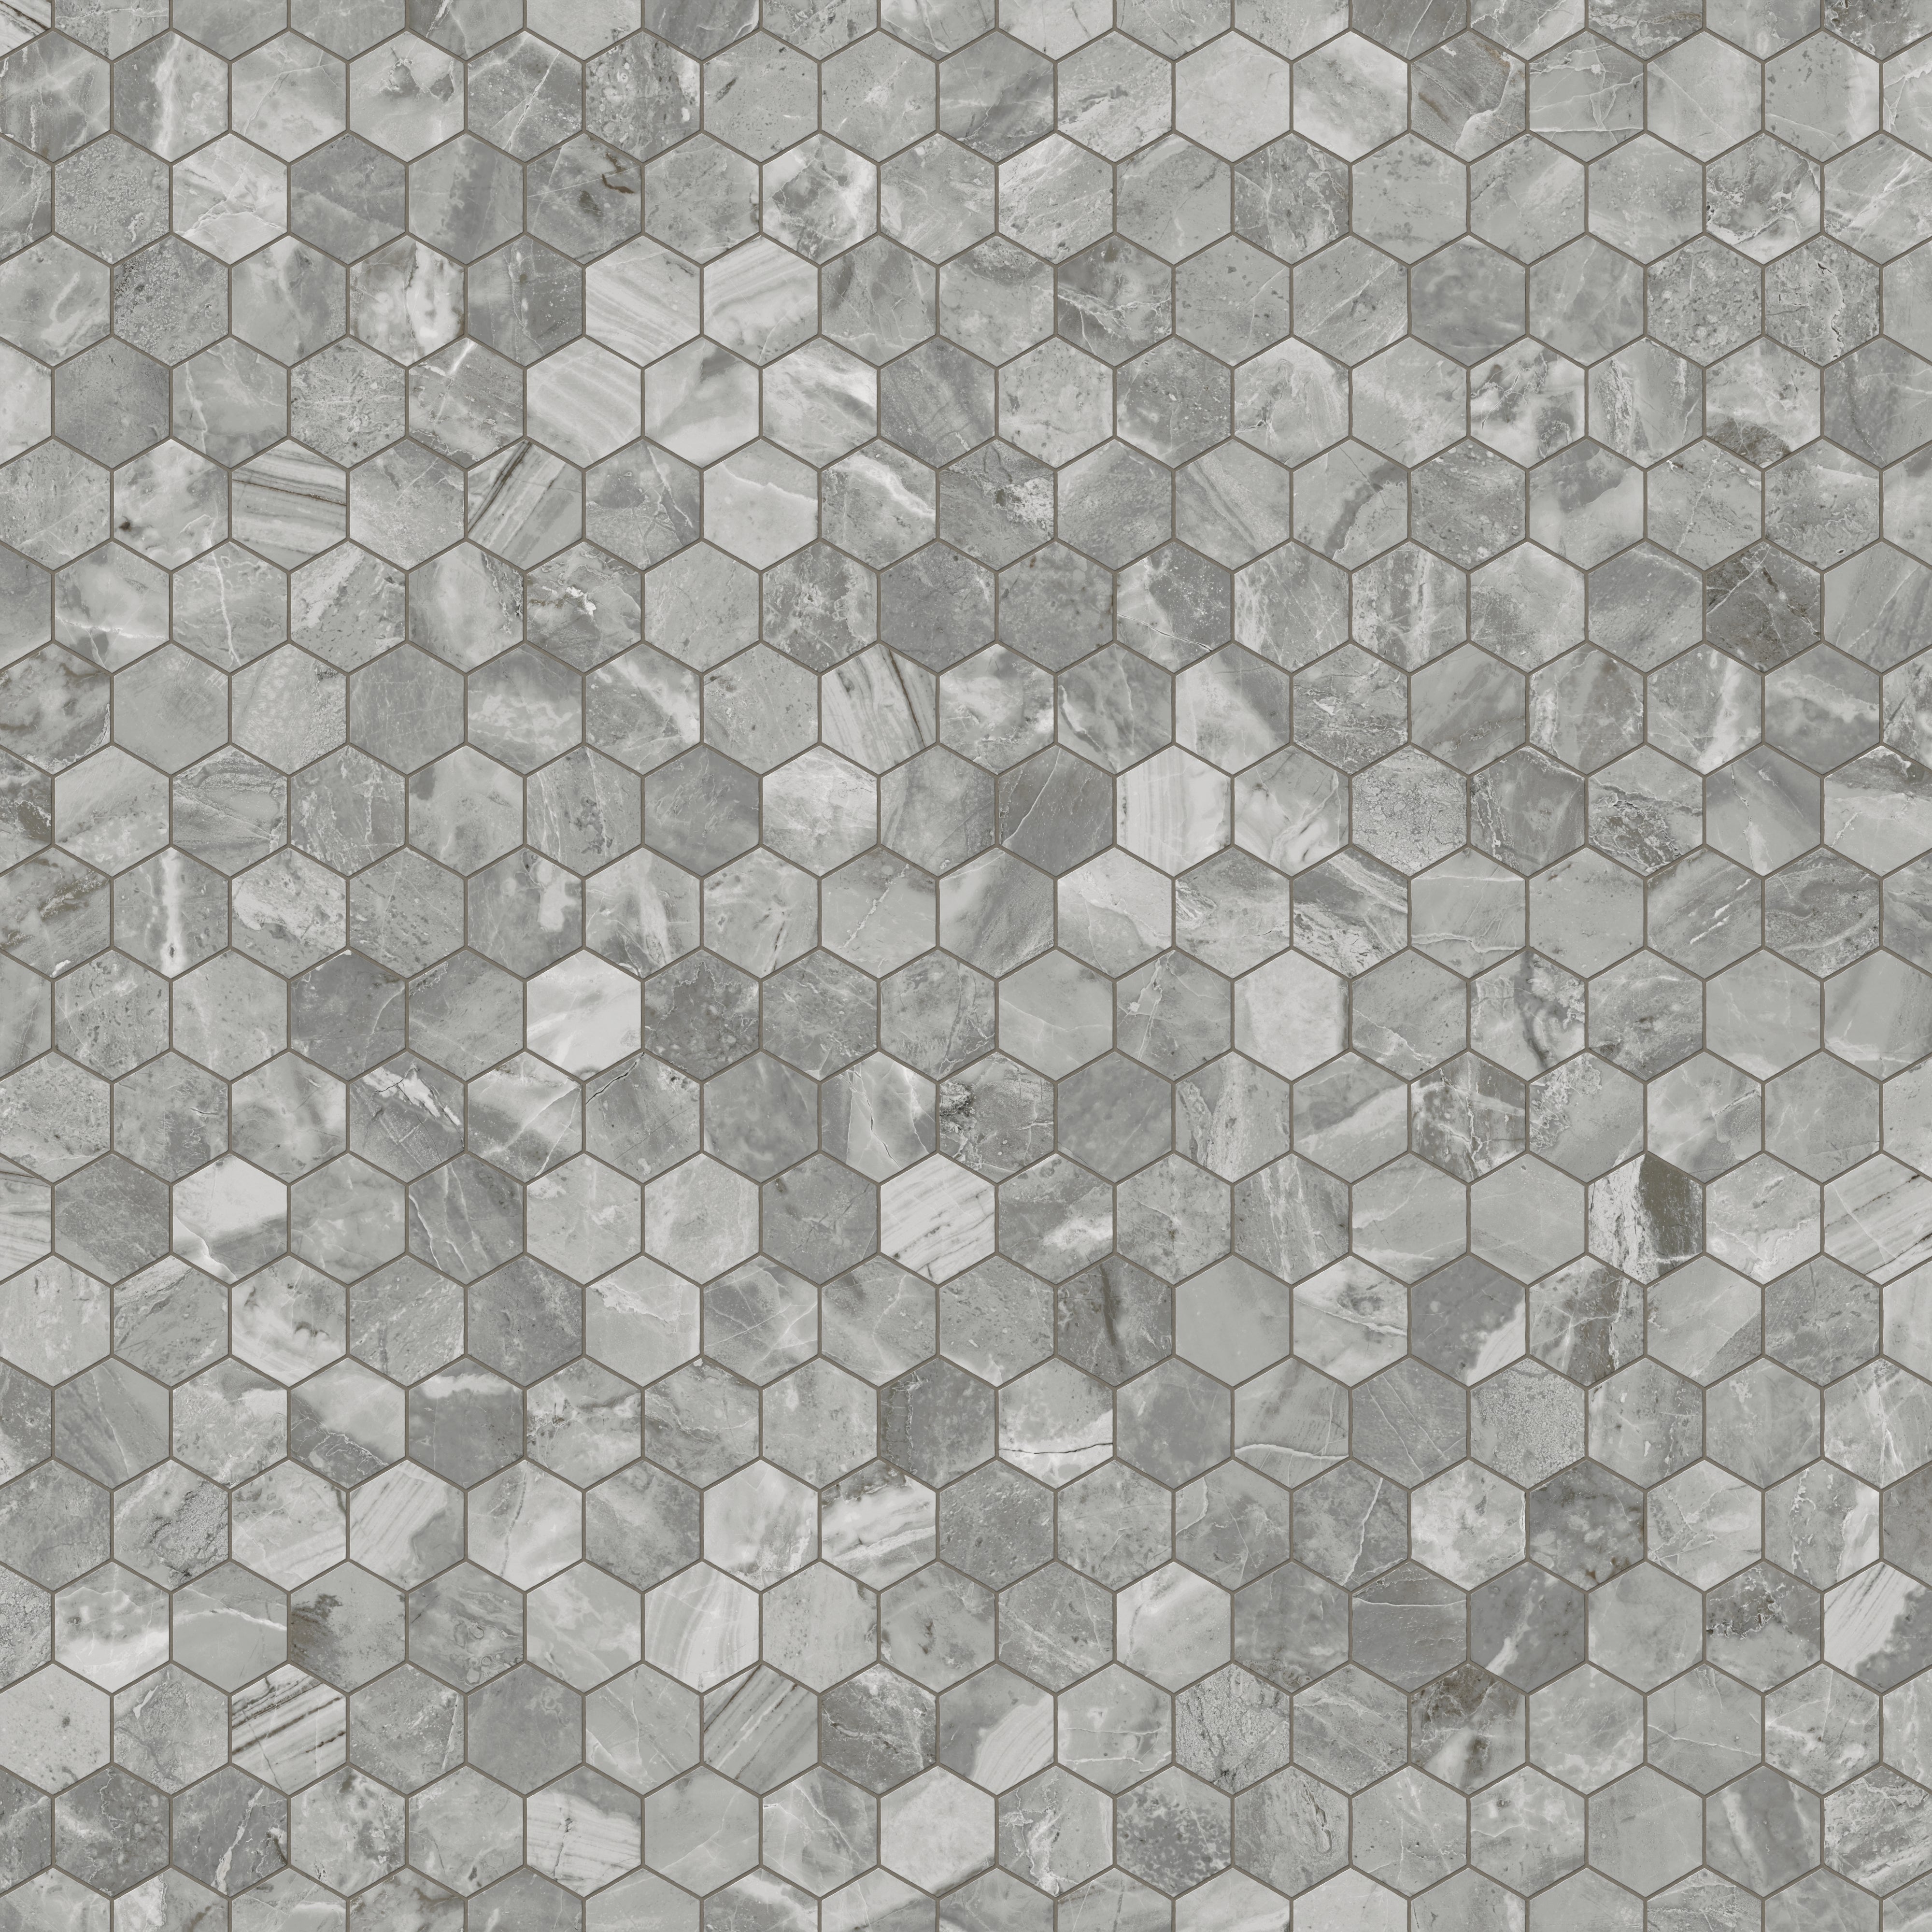 Blair 3x3 Polished Porcelain Hexagon Mosaic Tile in Oniciata Grey